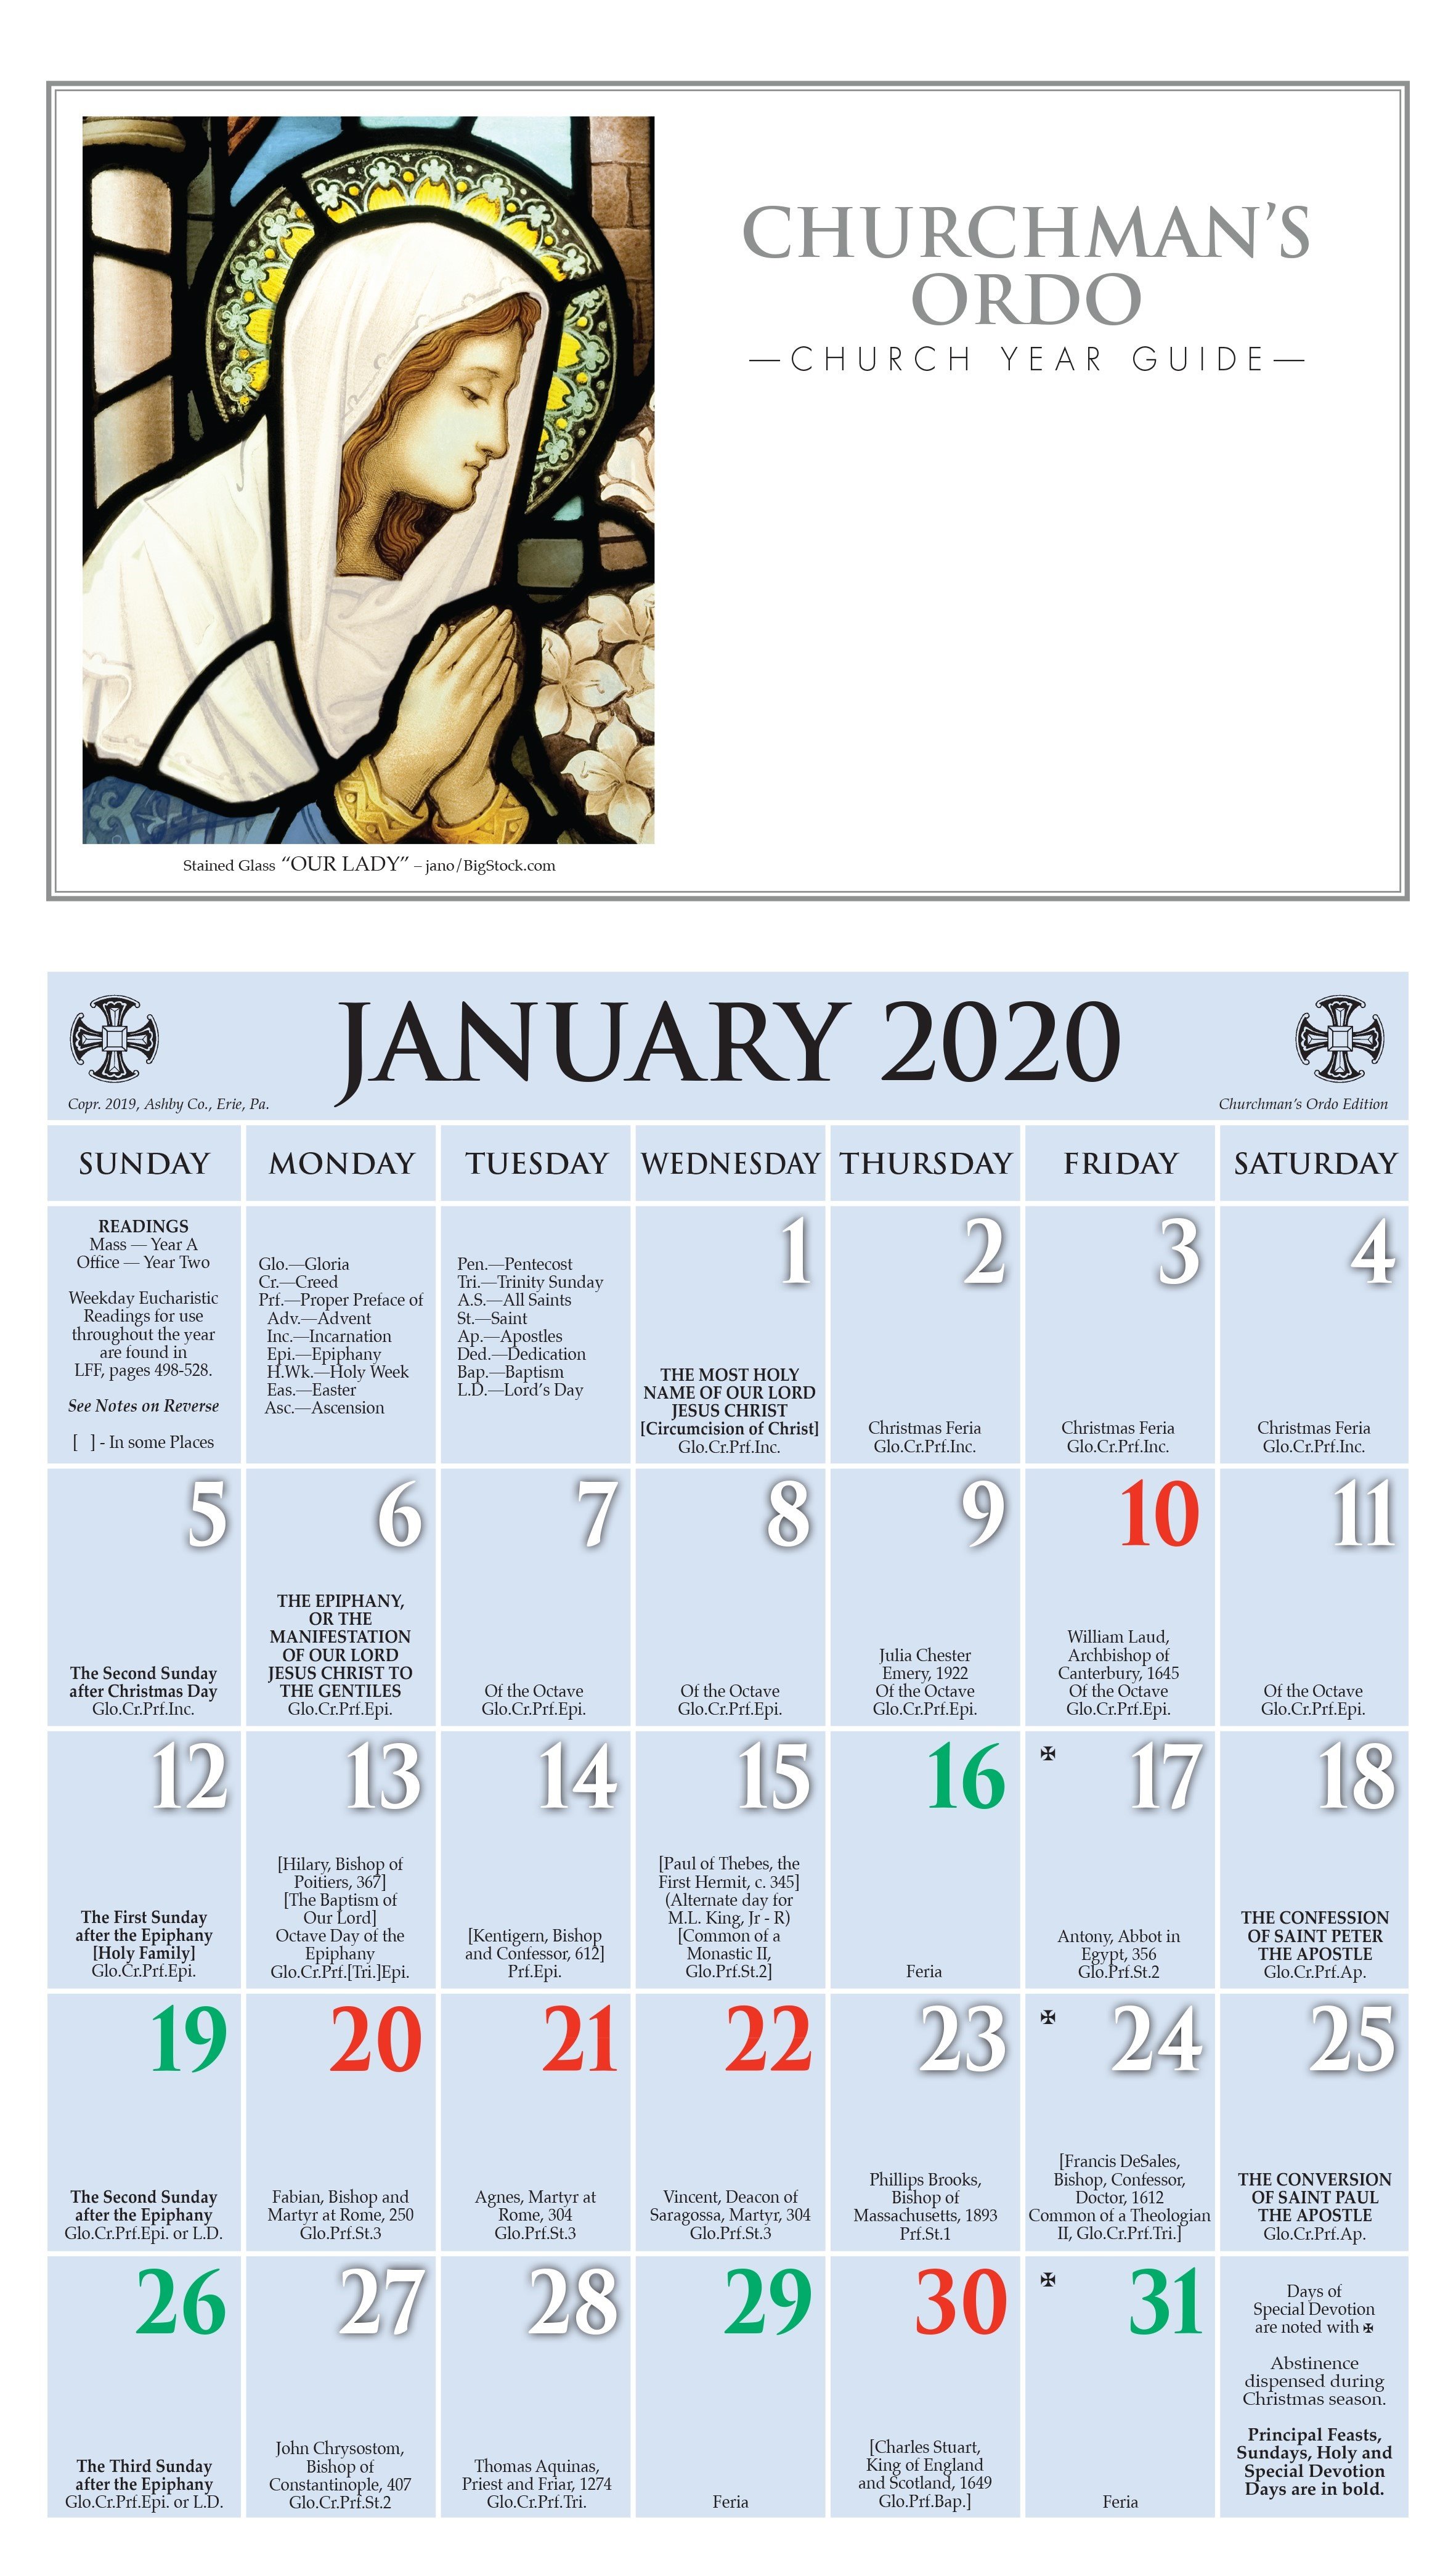 ChurchPublishing.org: Churchman’s Ordo Kalendar 2020